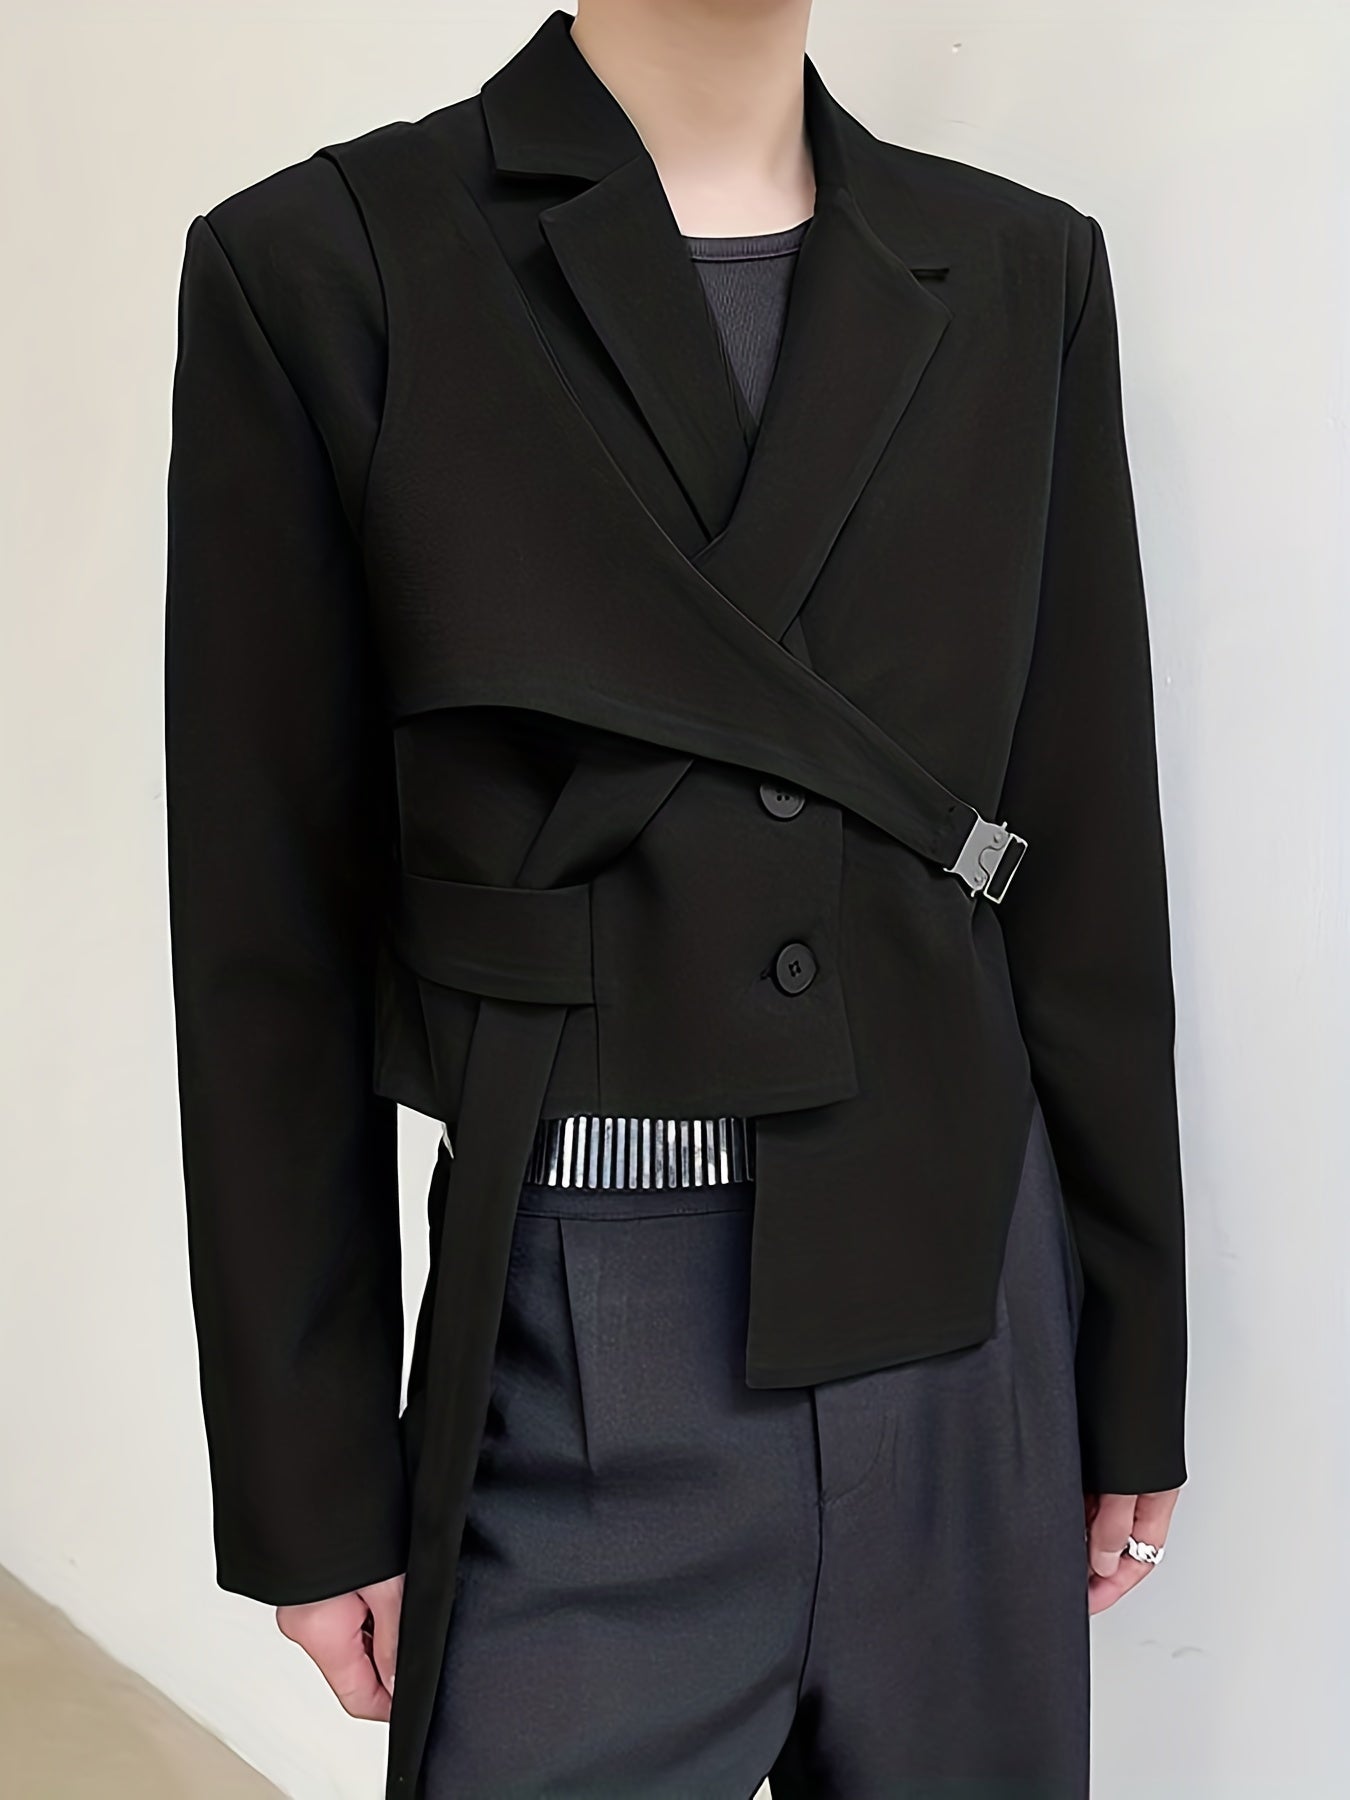 Men's Korean Style Irregular Design Blazer With Belt, Long Sleeve High Waist Suit Jackets For Party, Funky Club Wear Coat Outwear Tops, Men's Clothing, Plus Size